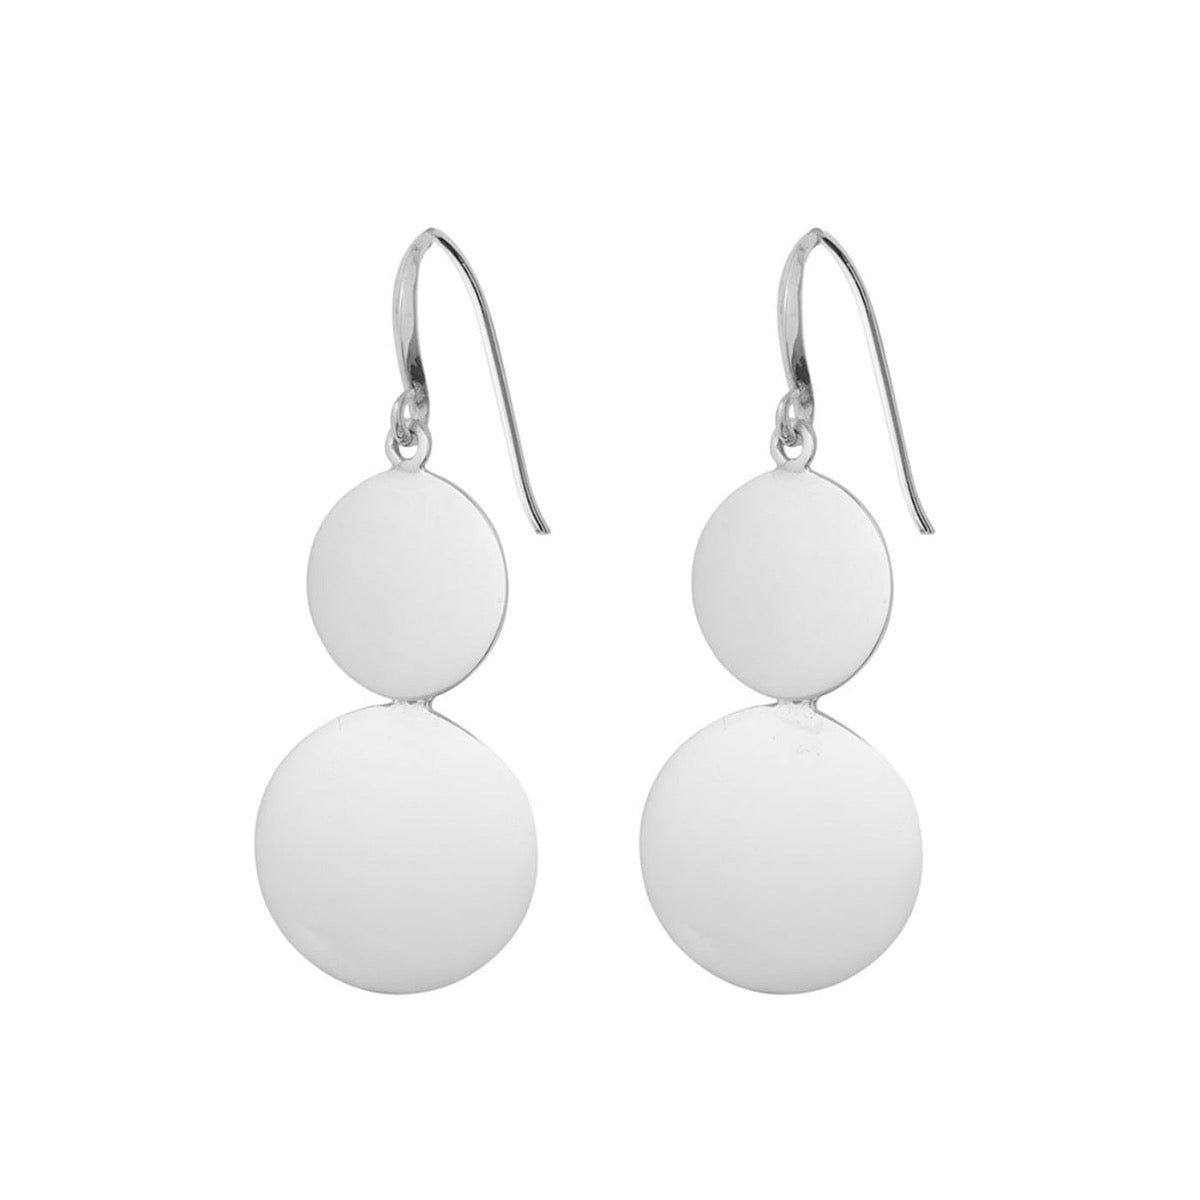 Silver double circle drop earrings